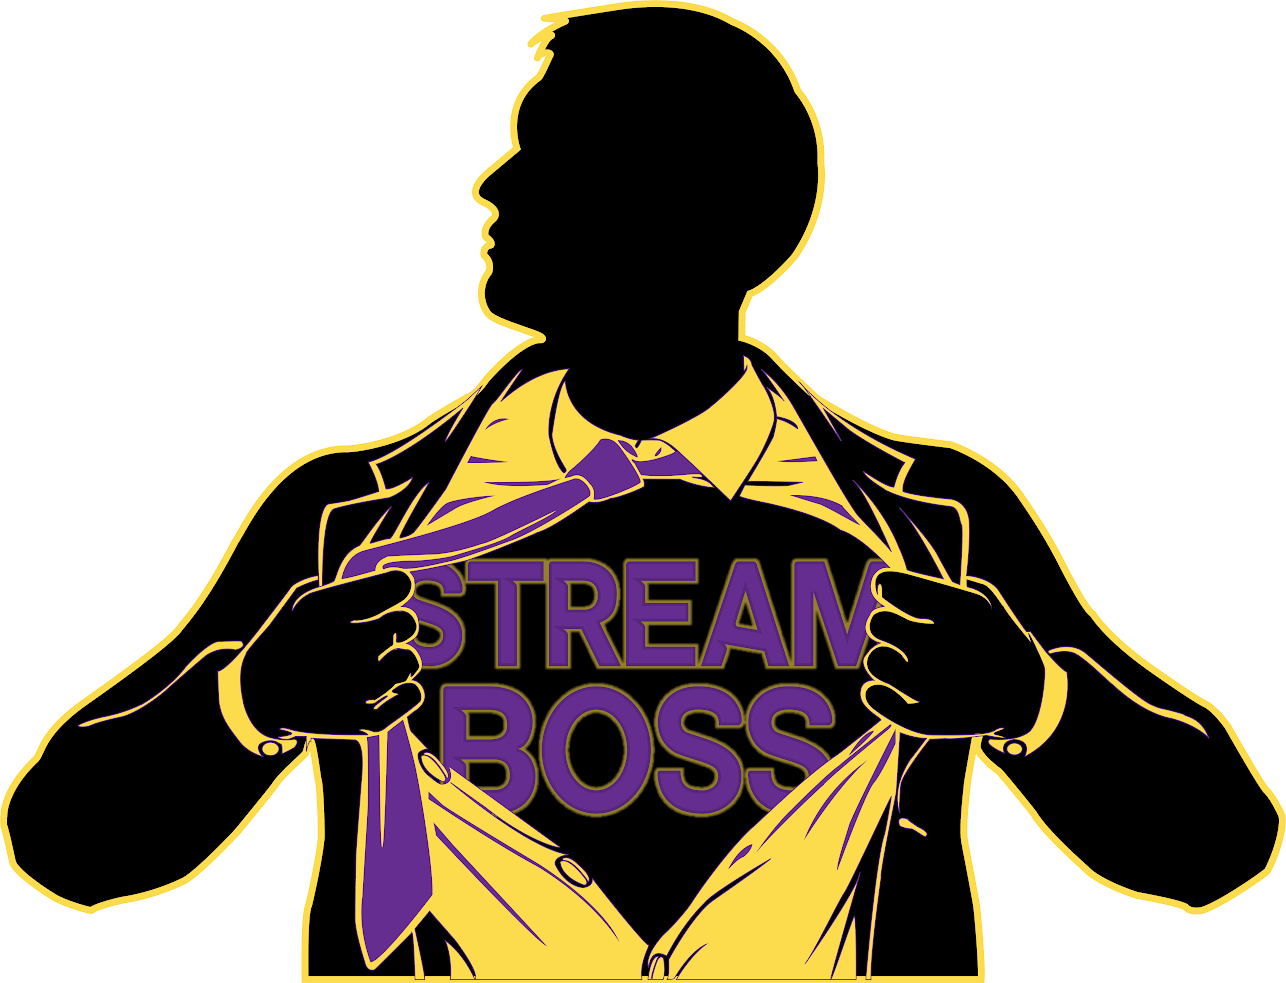 The Stream Boss